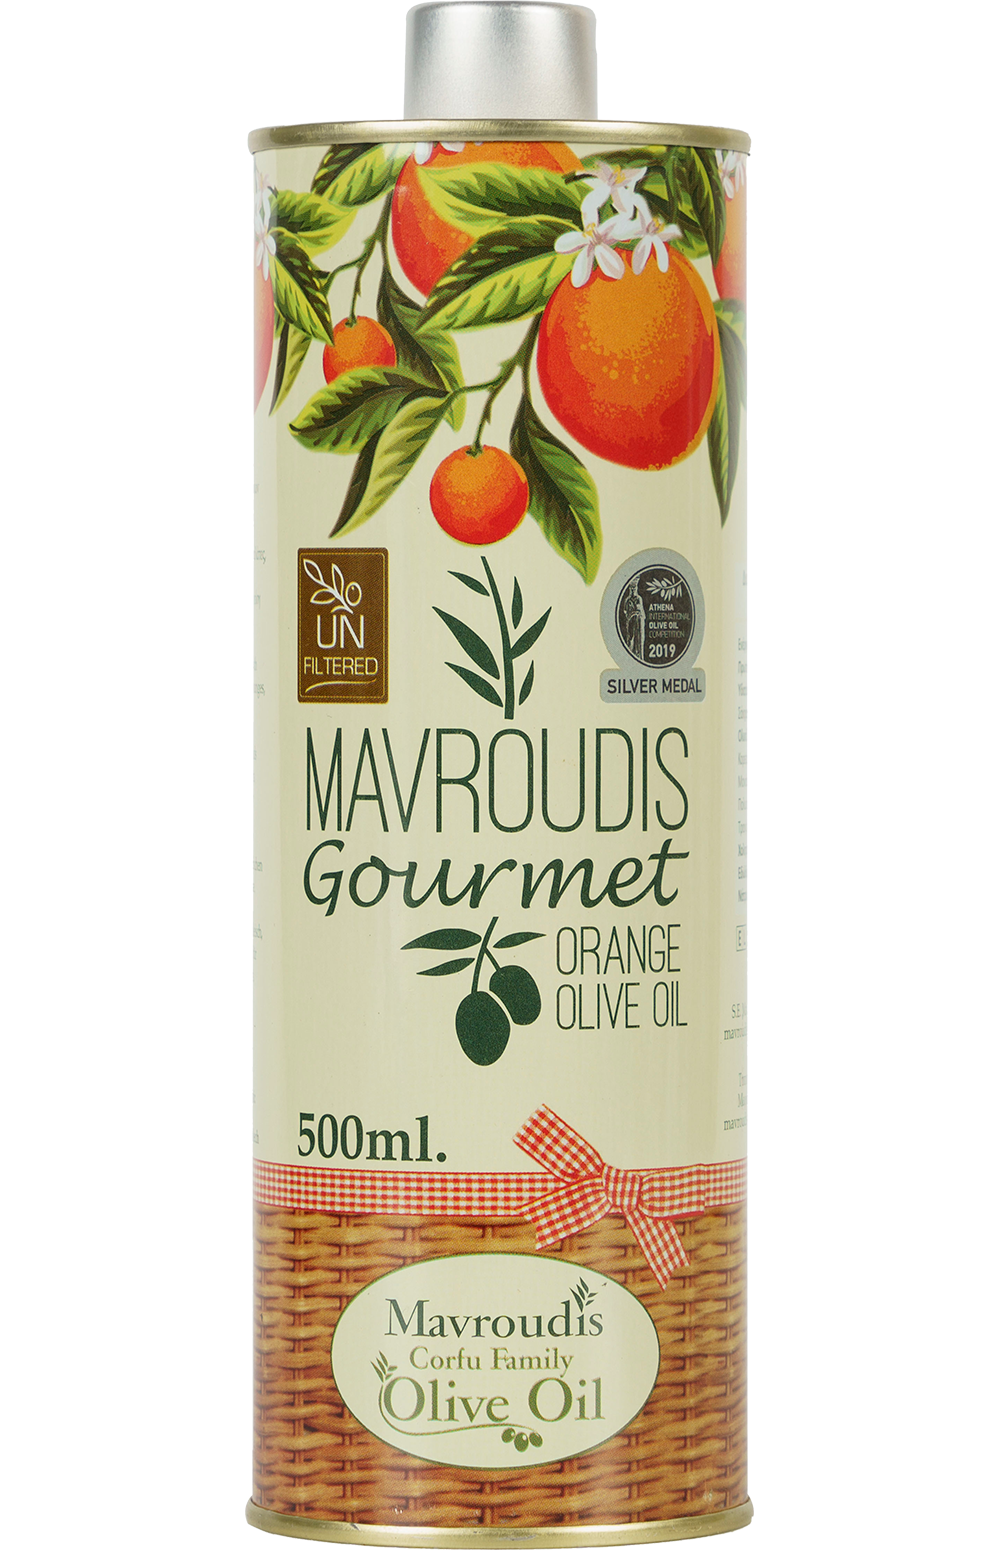 Mavroudis Gourmet Orange